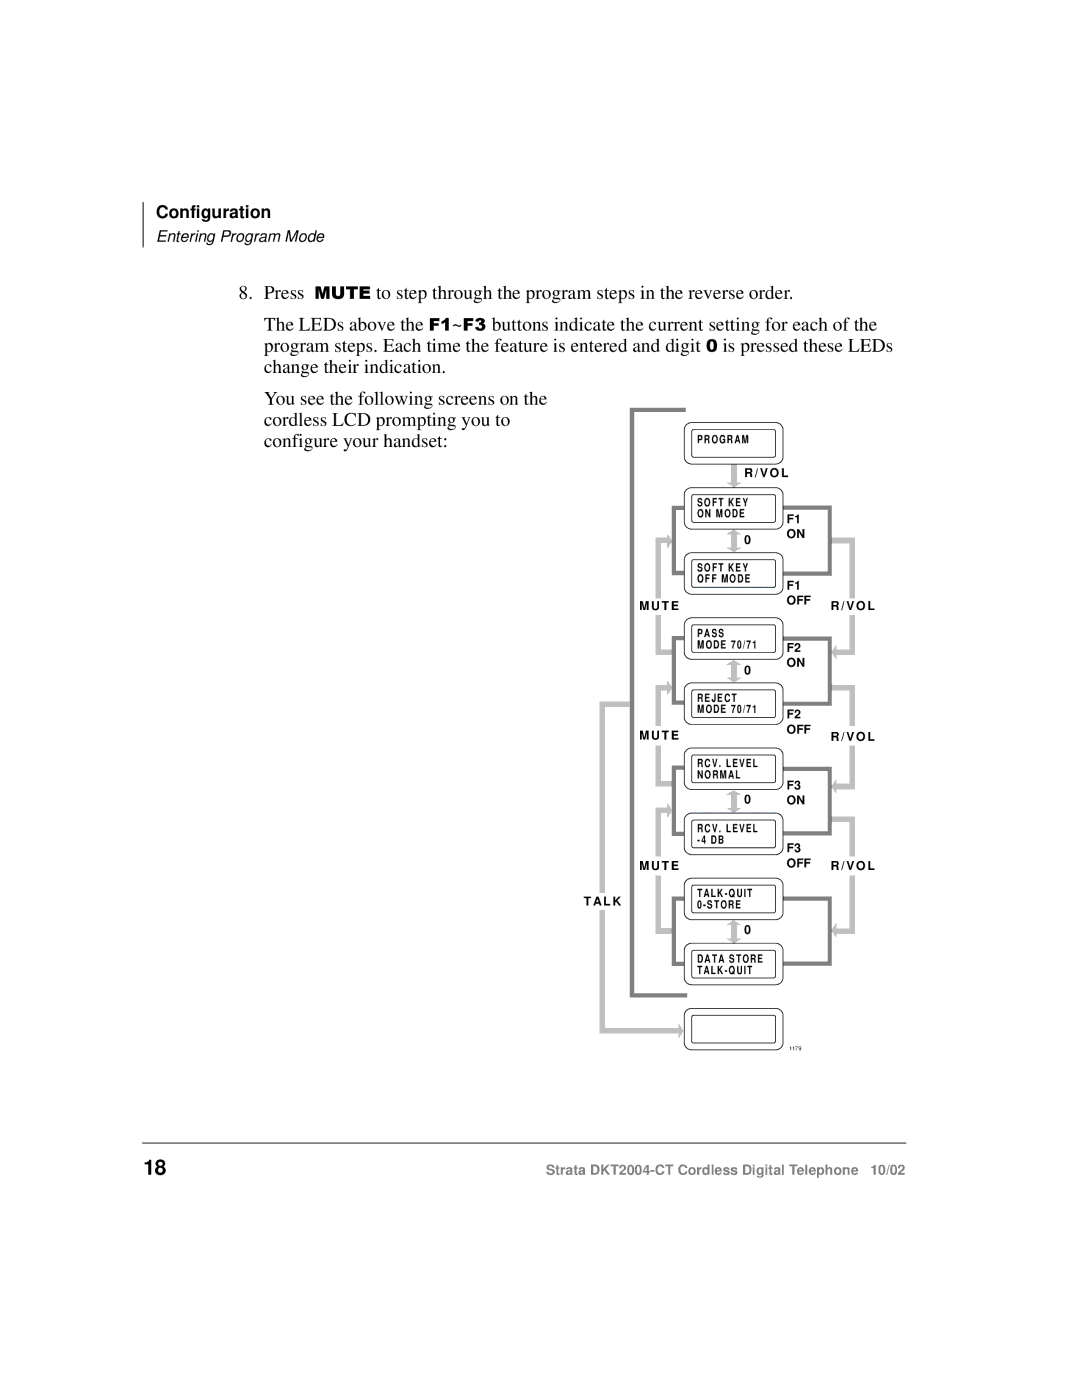 Toshiba DKT2004-CT manual Configuration 